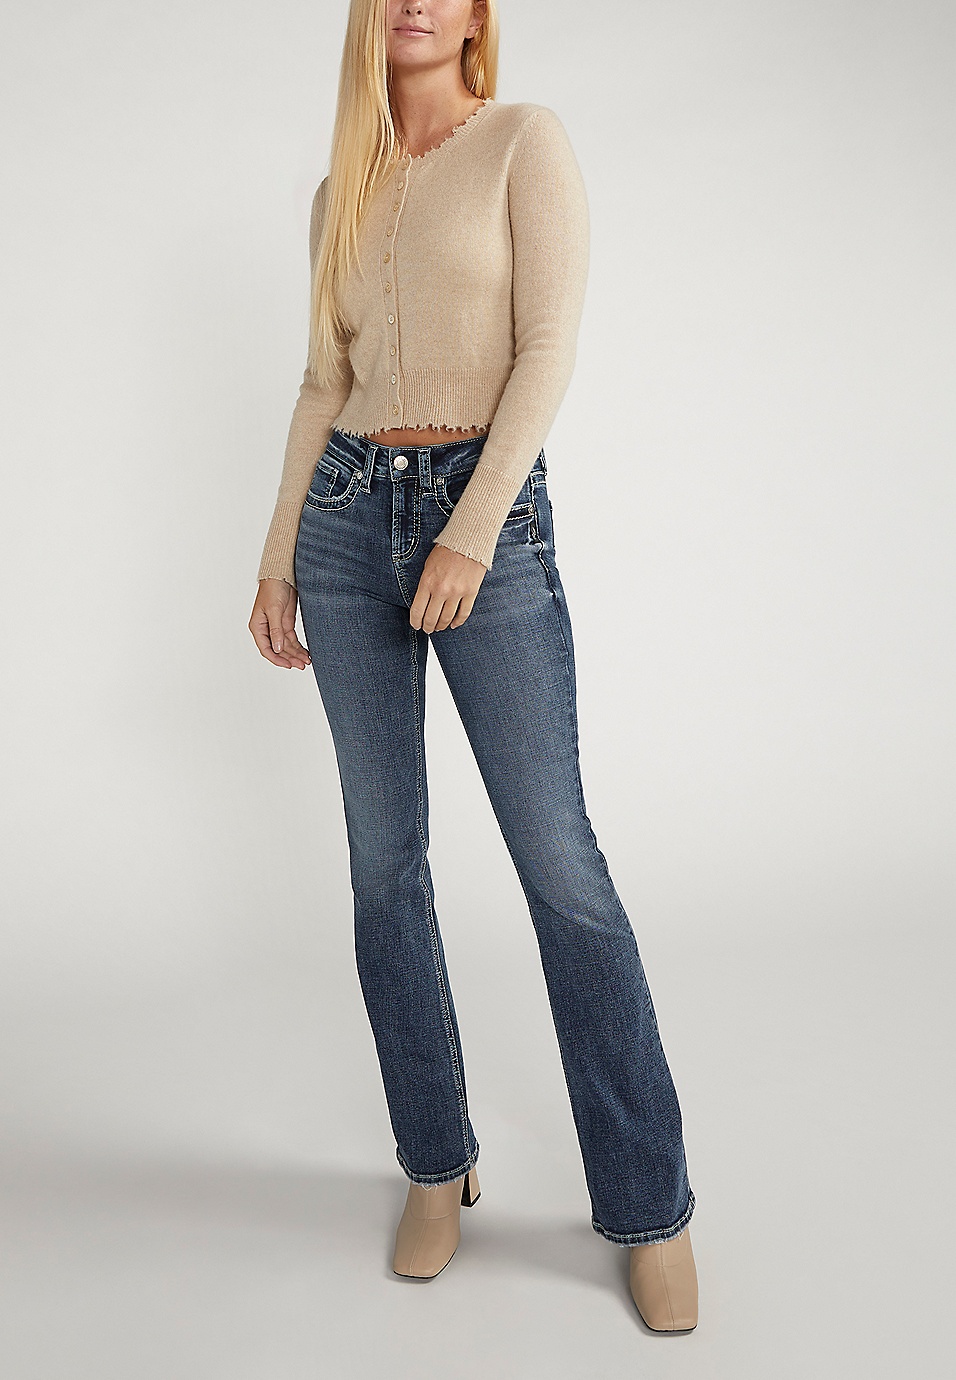 Silver Jeans Co.® Suki Curvy Mid Rise Wide Leg Jean